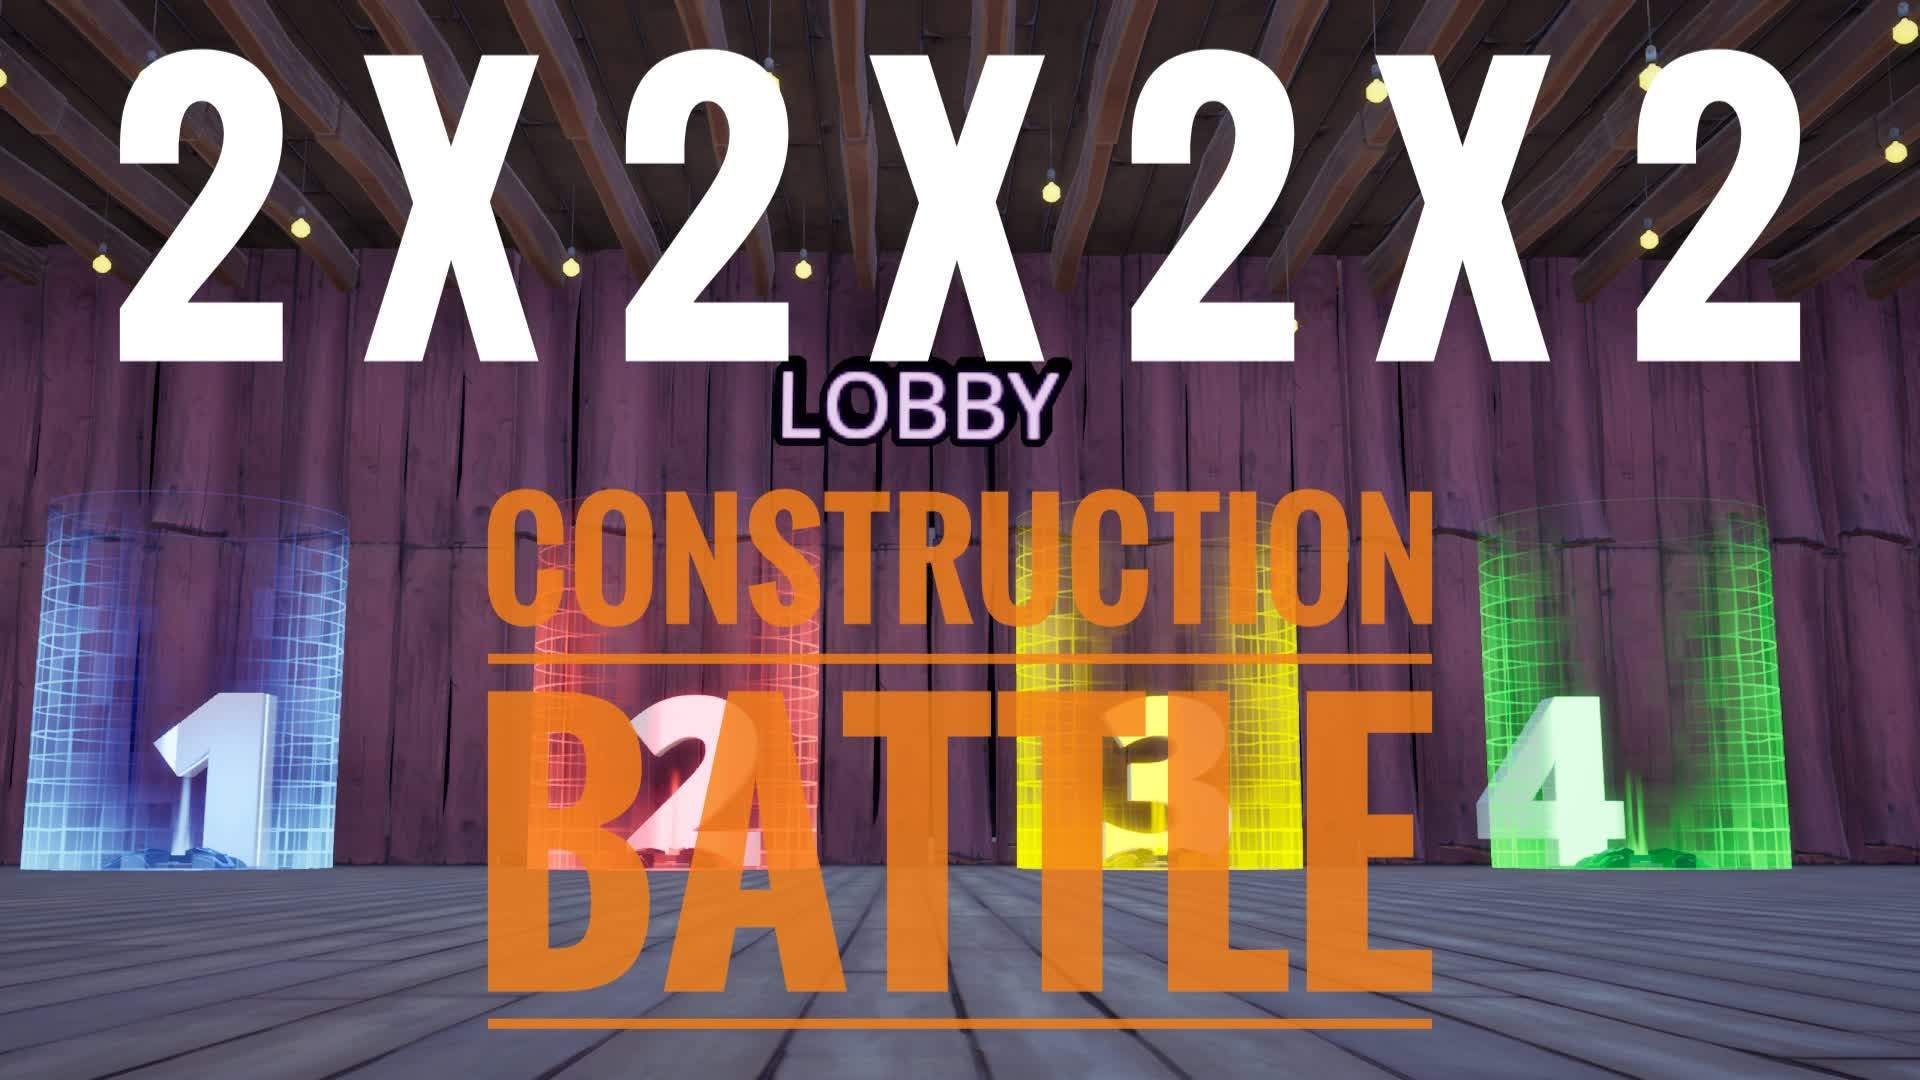 2x2x2x2 Construction battle